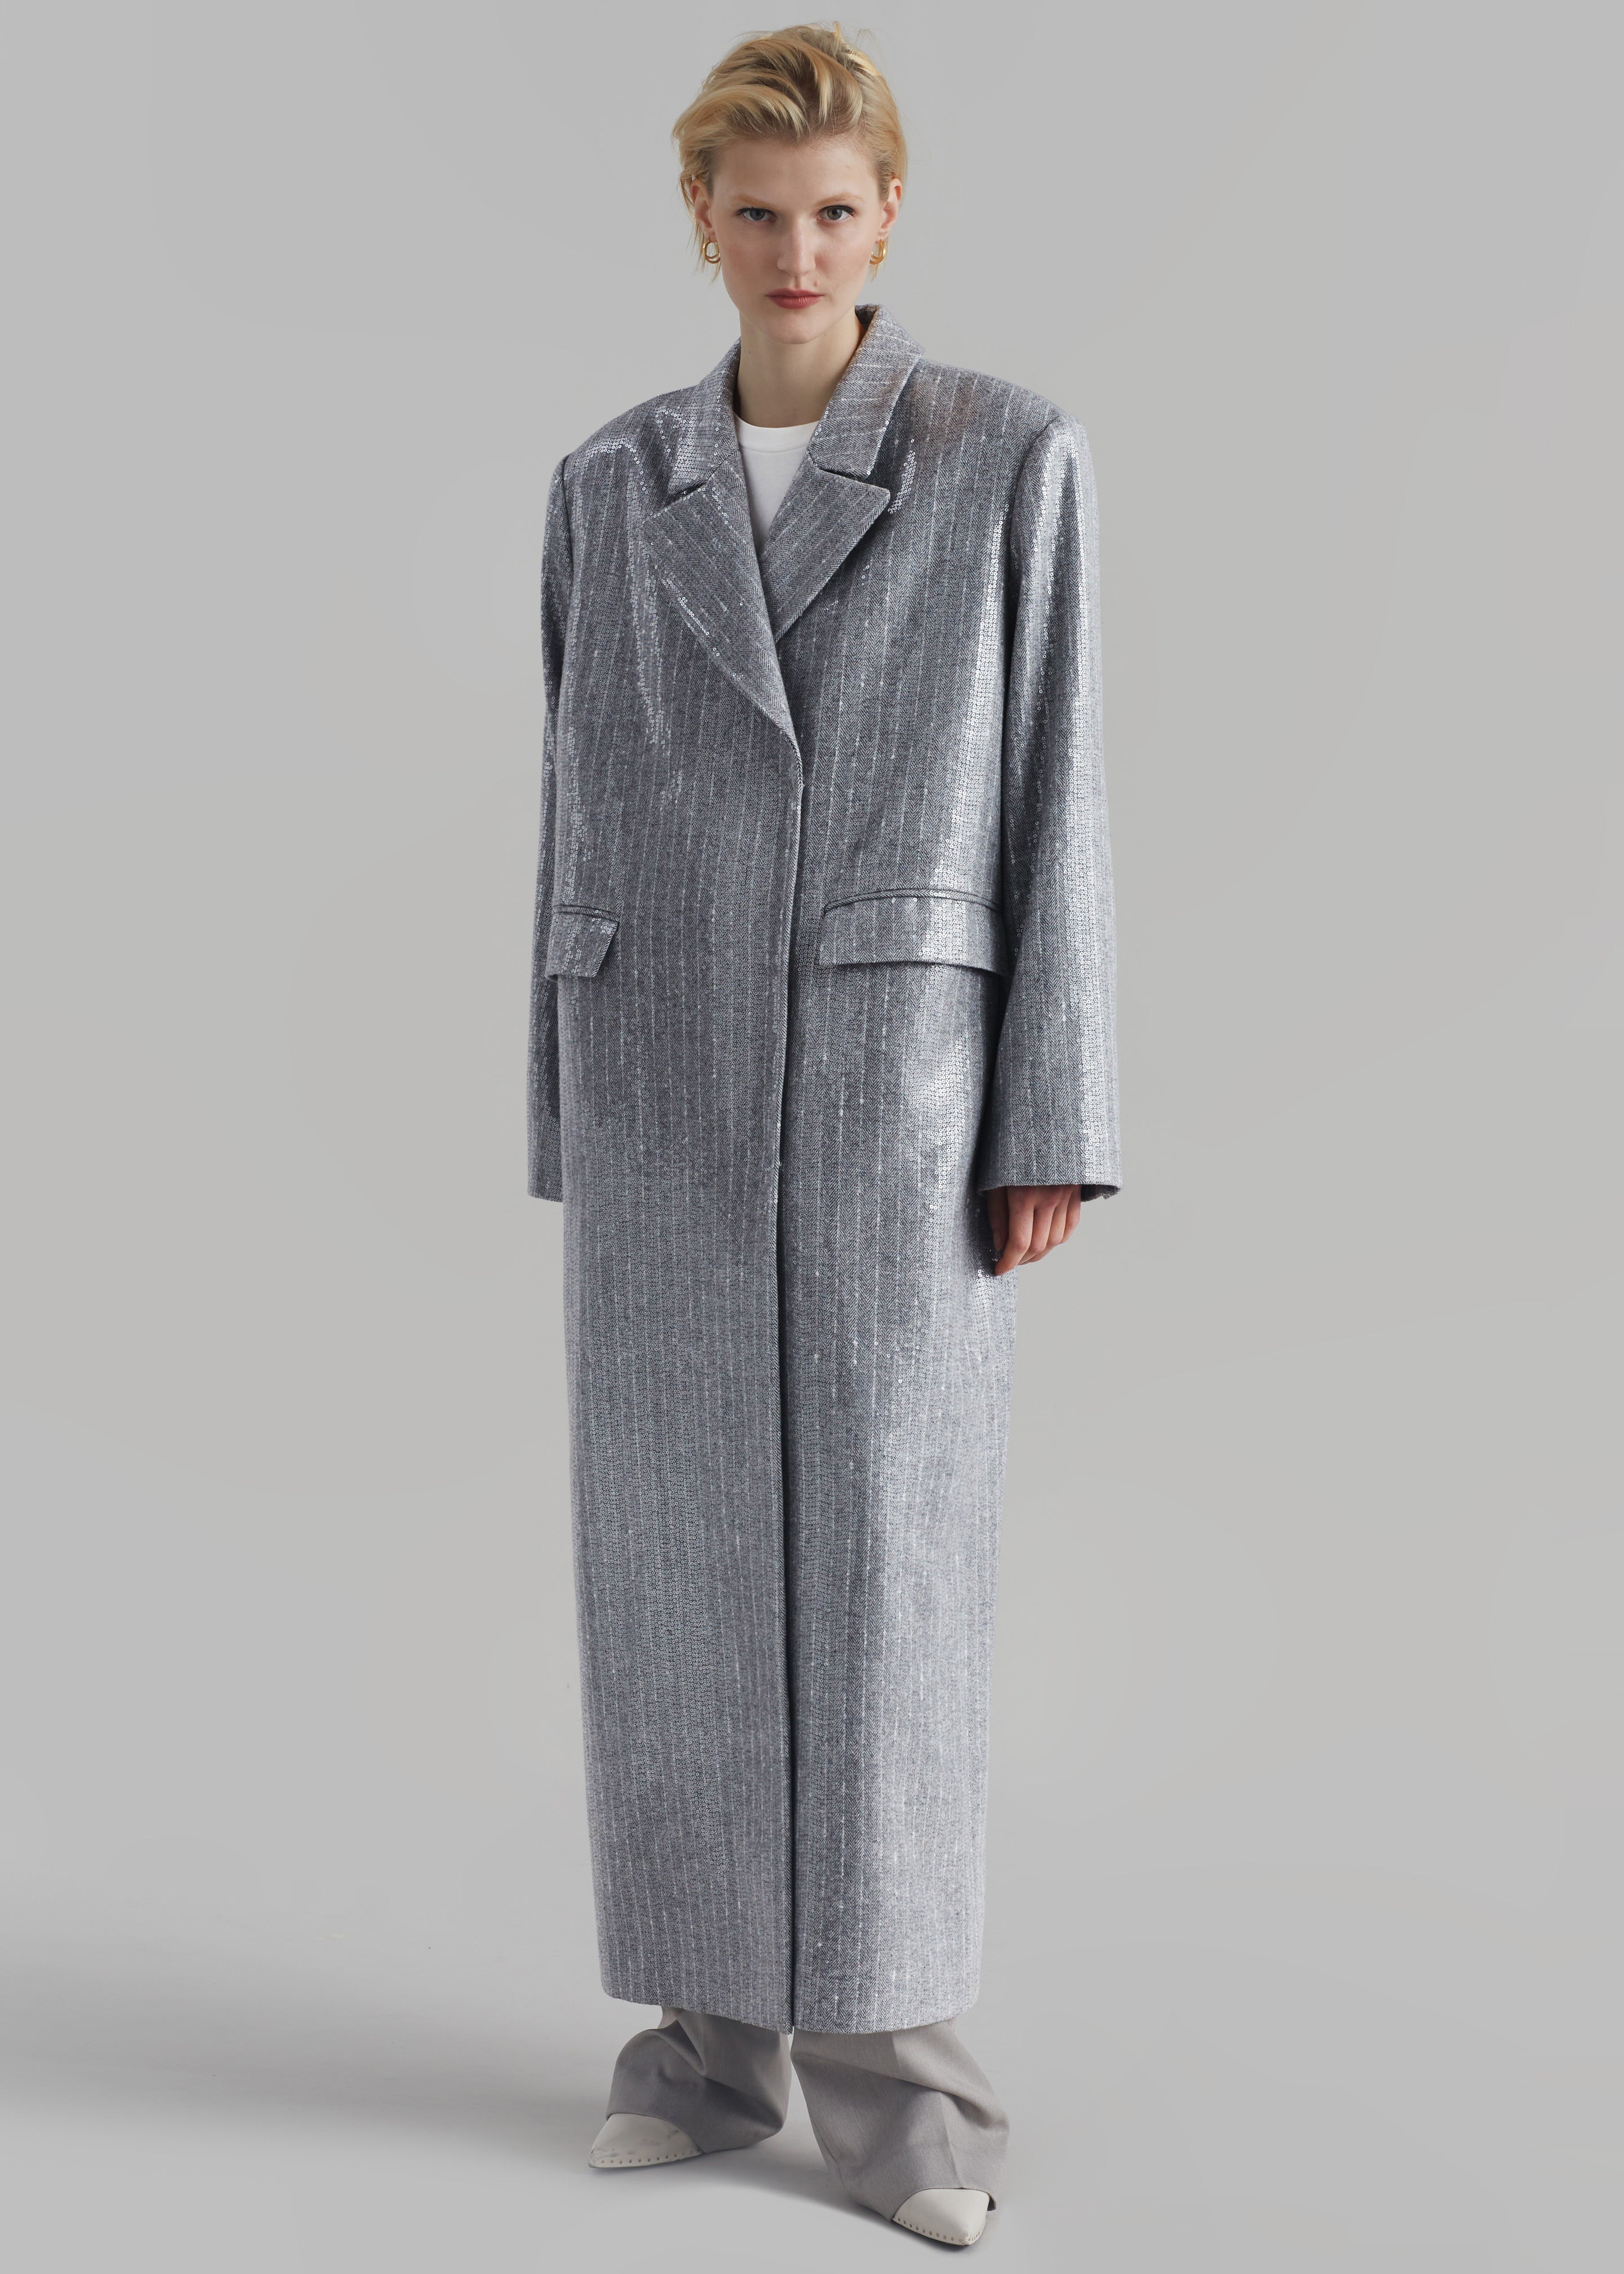 Jennifer Sequins Coat - Grey/White Stripe - 3